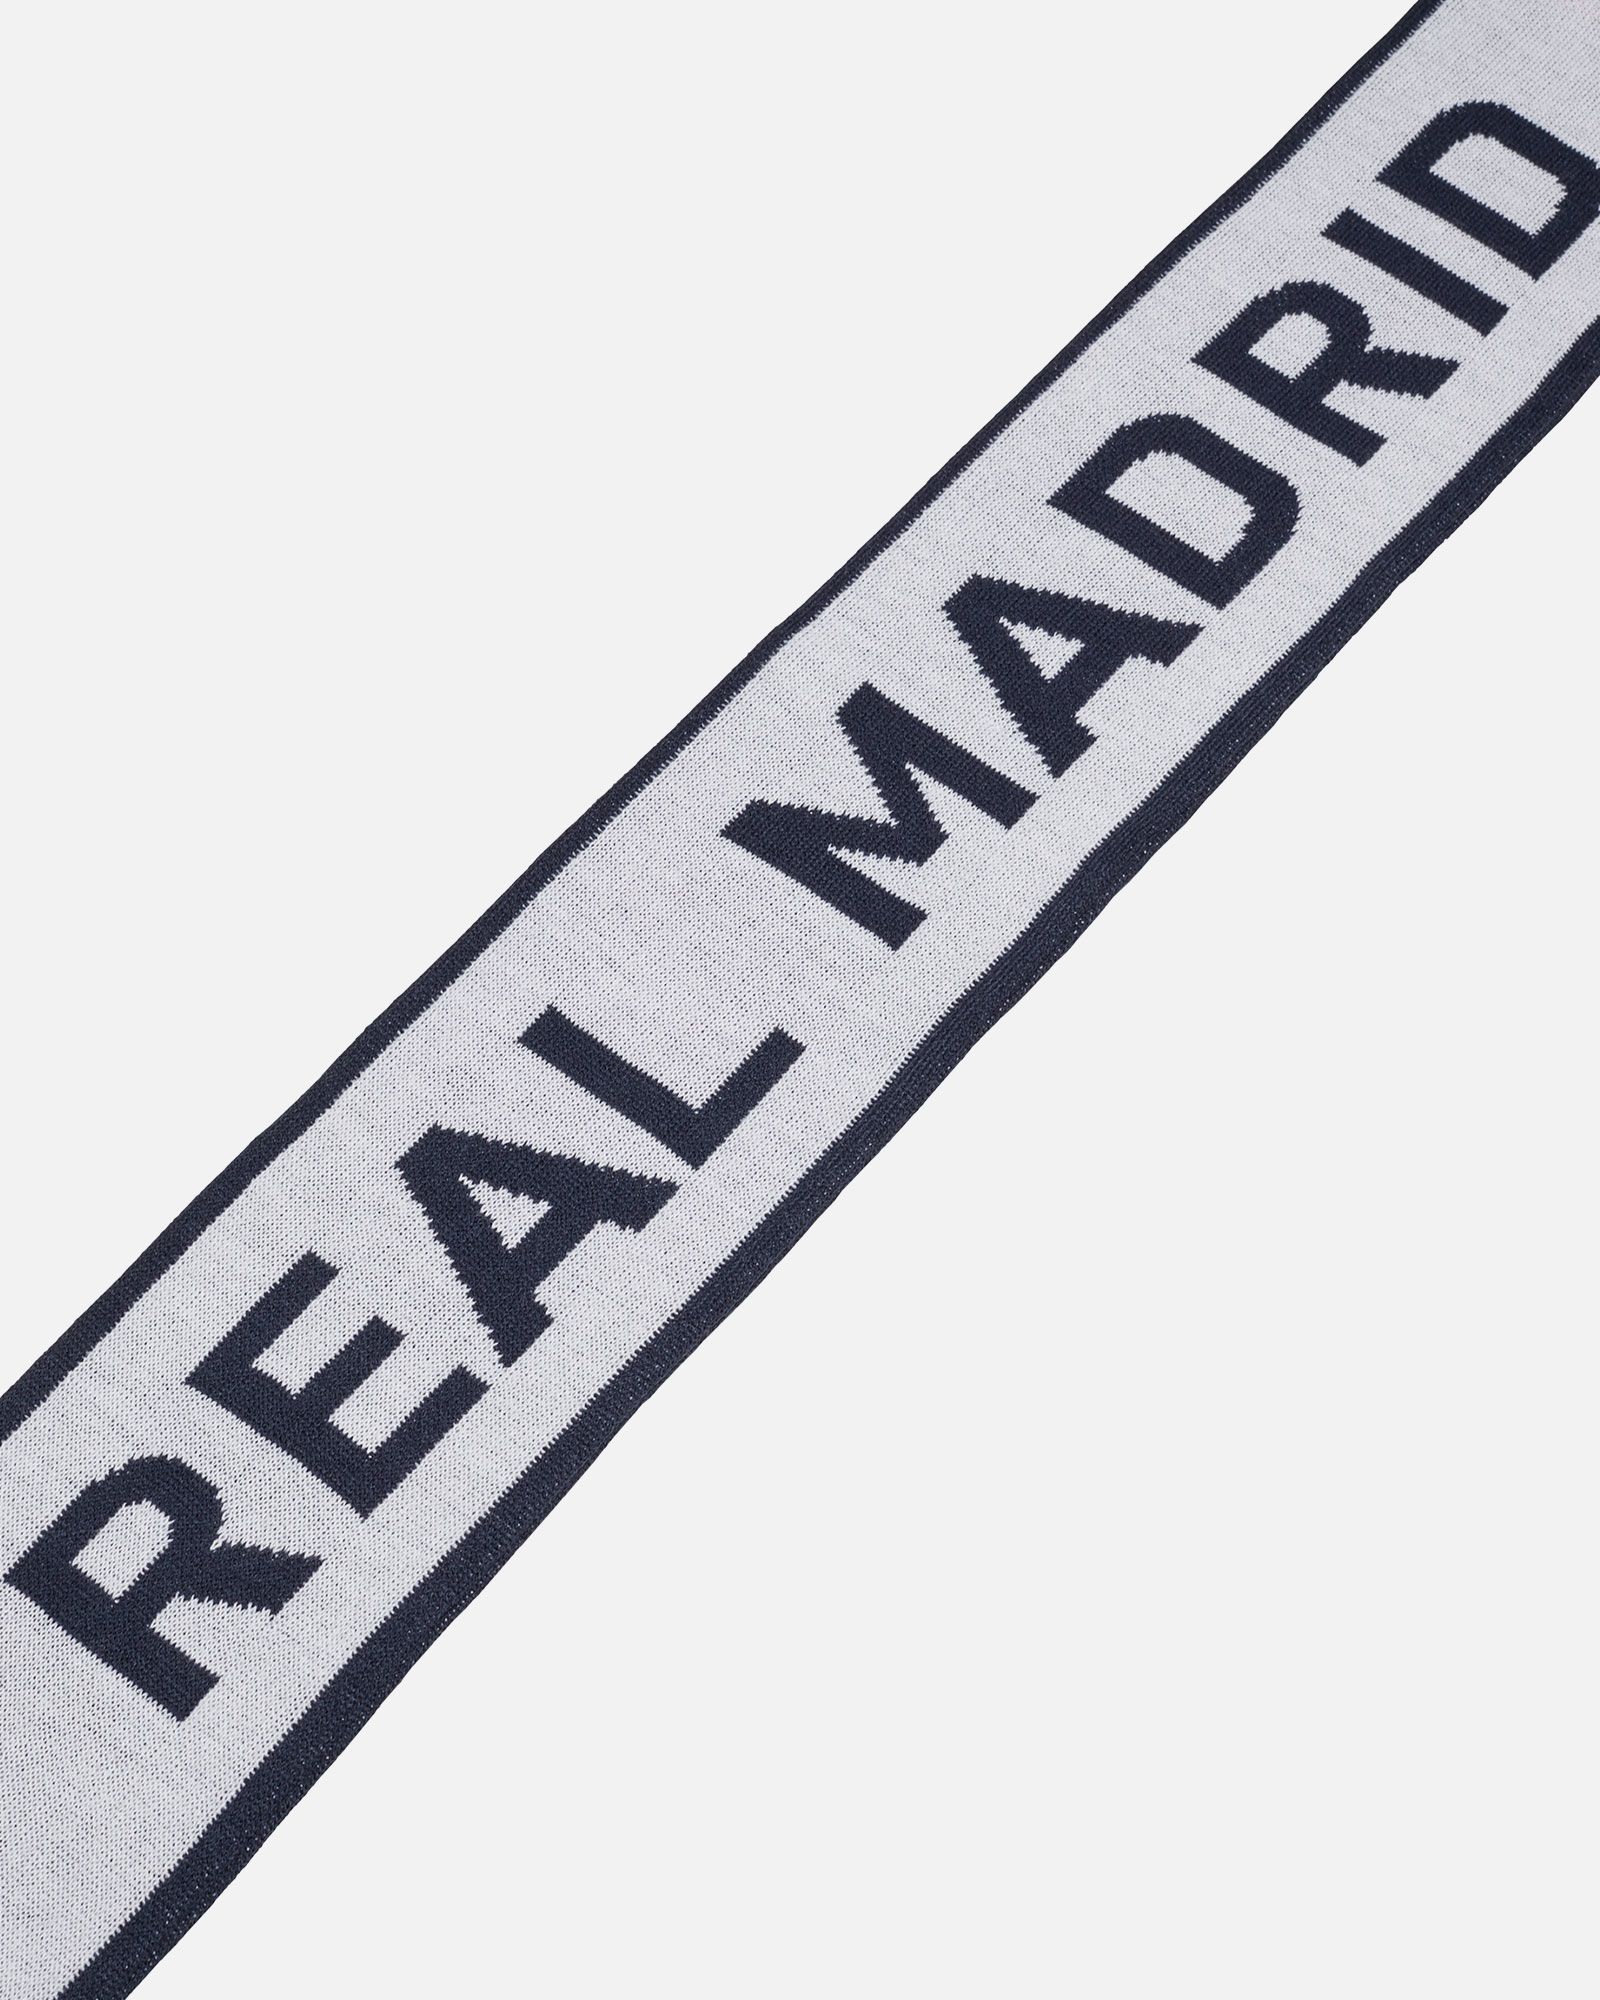 Bufanda Real Madrid 2020/2021 Blanco Marino - Fútbol Factory